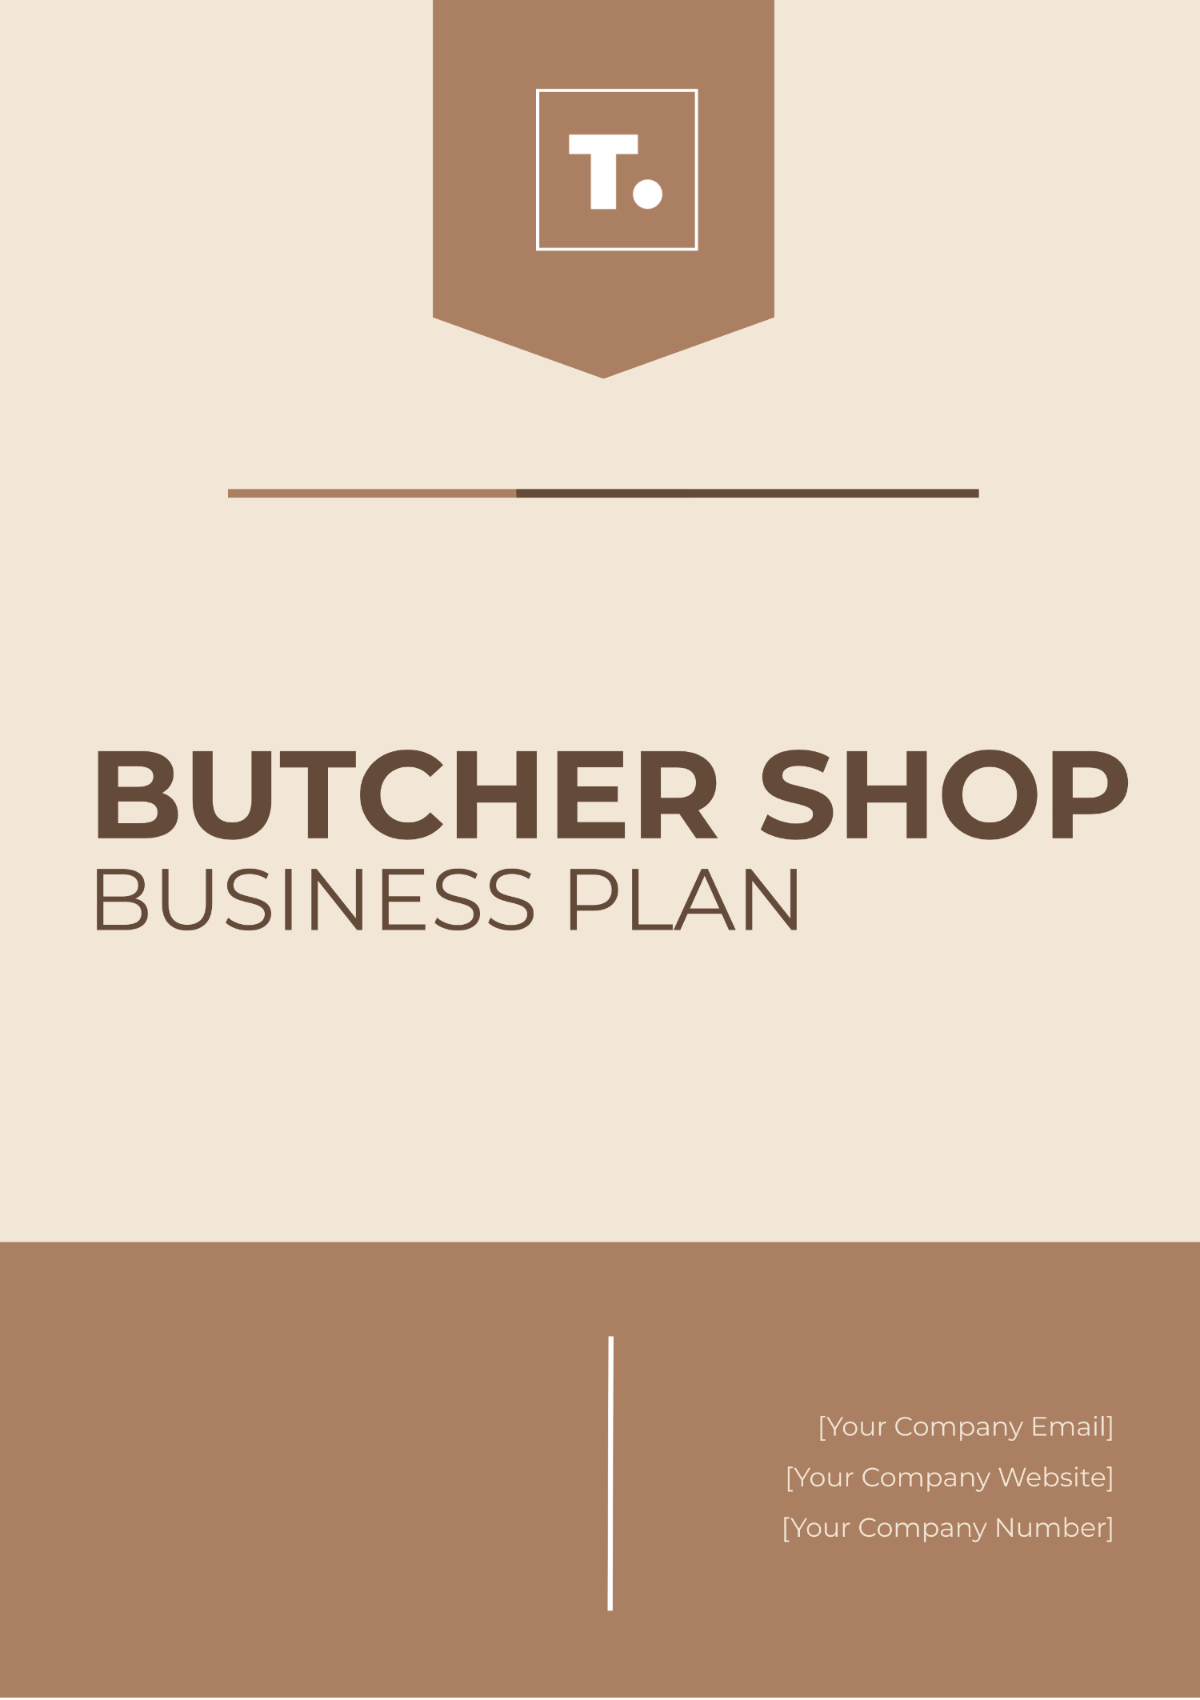 Butcher Shop Business Plan Template